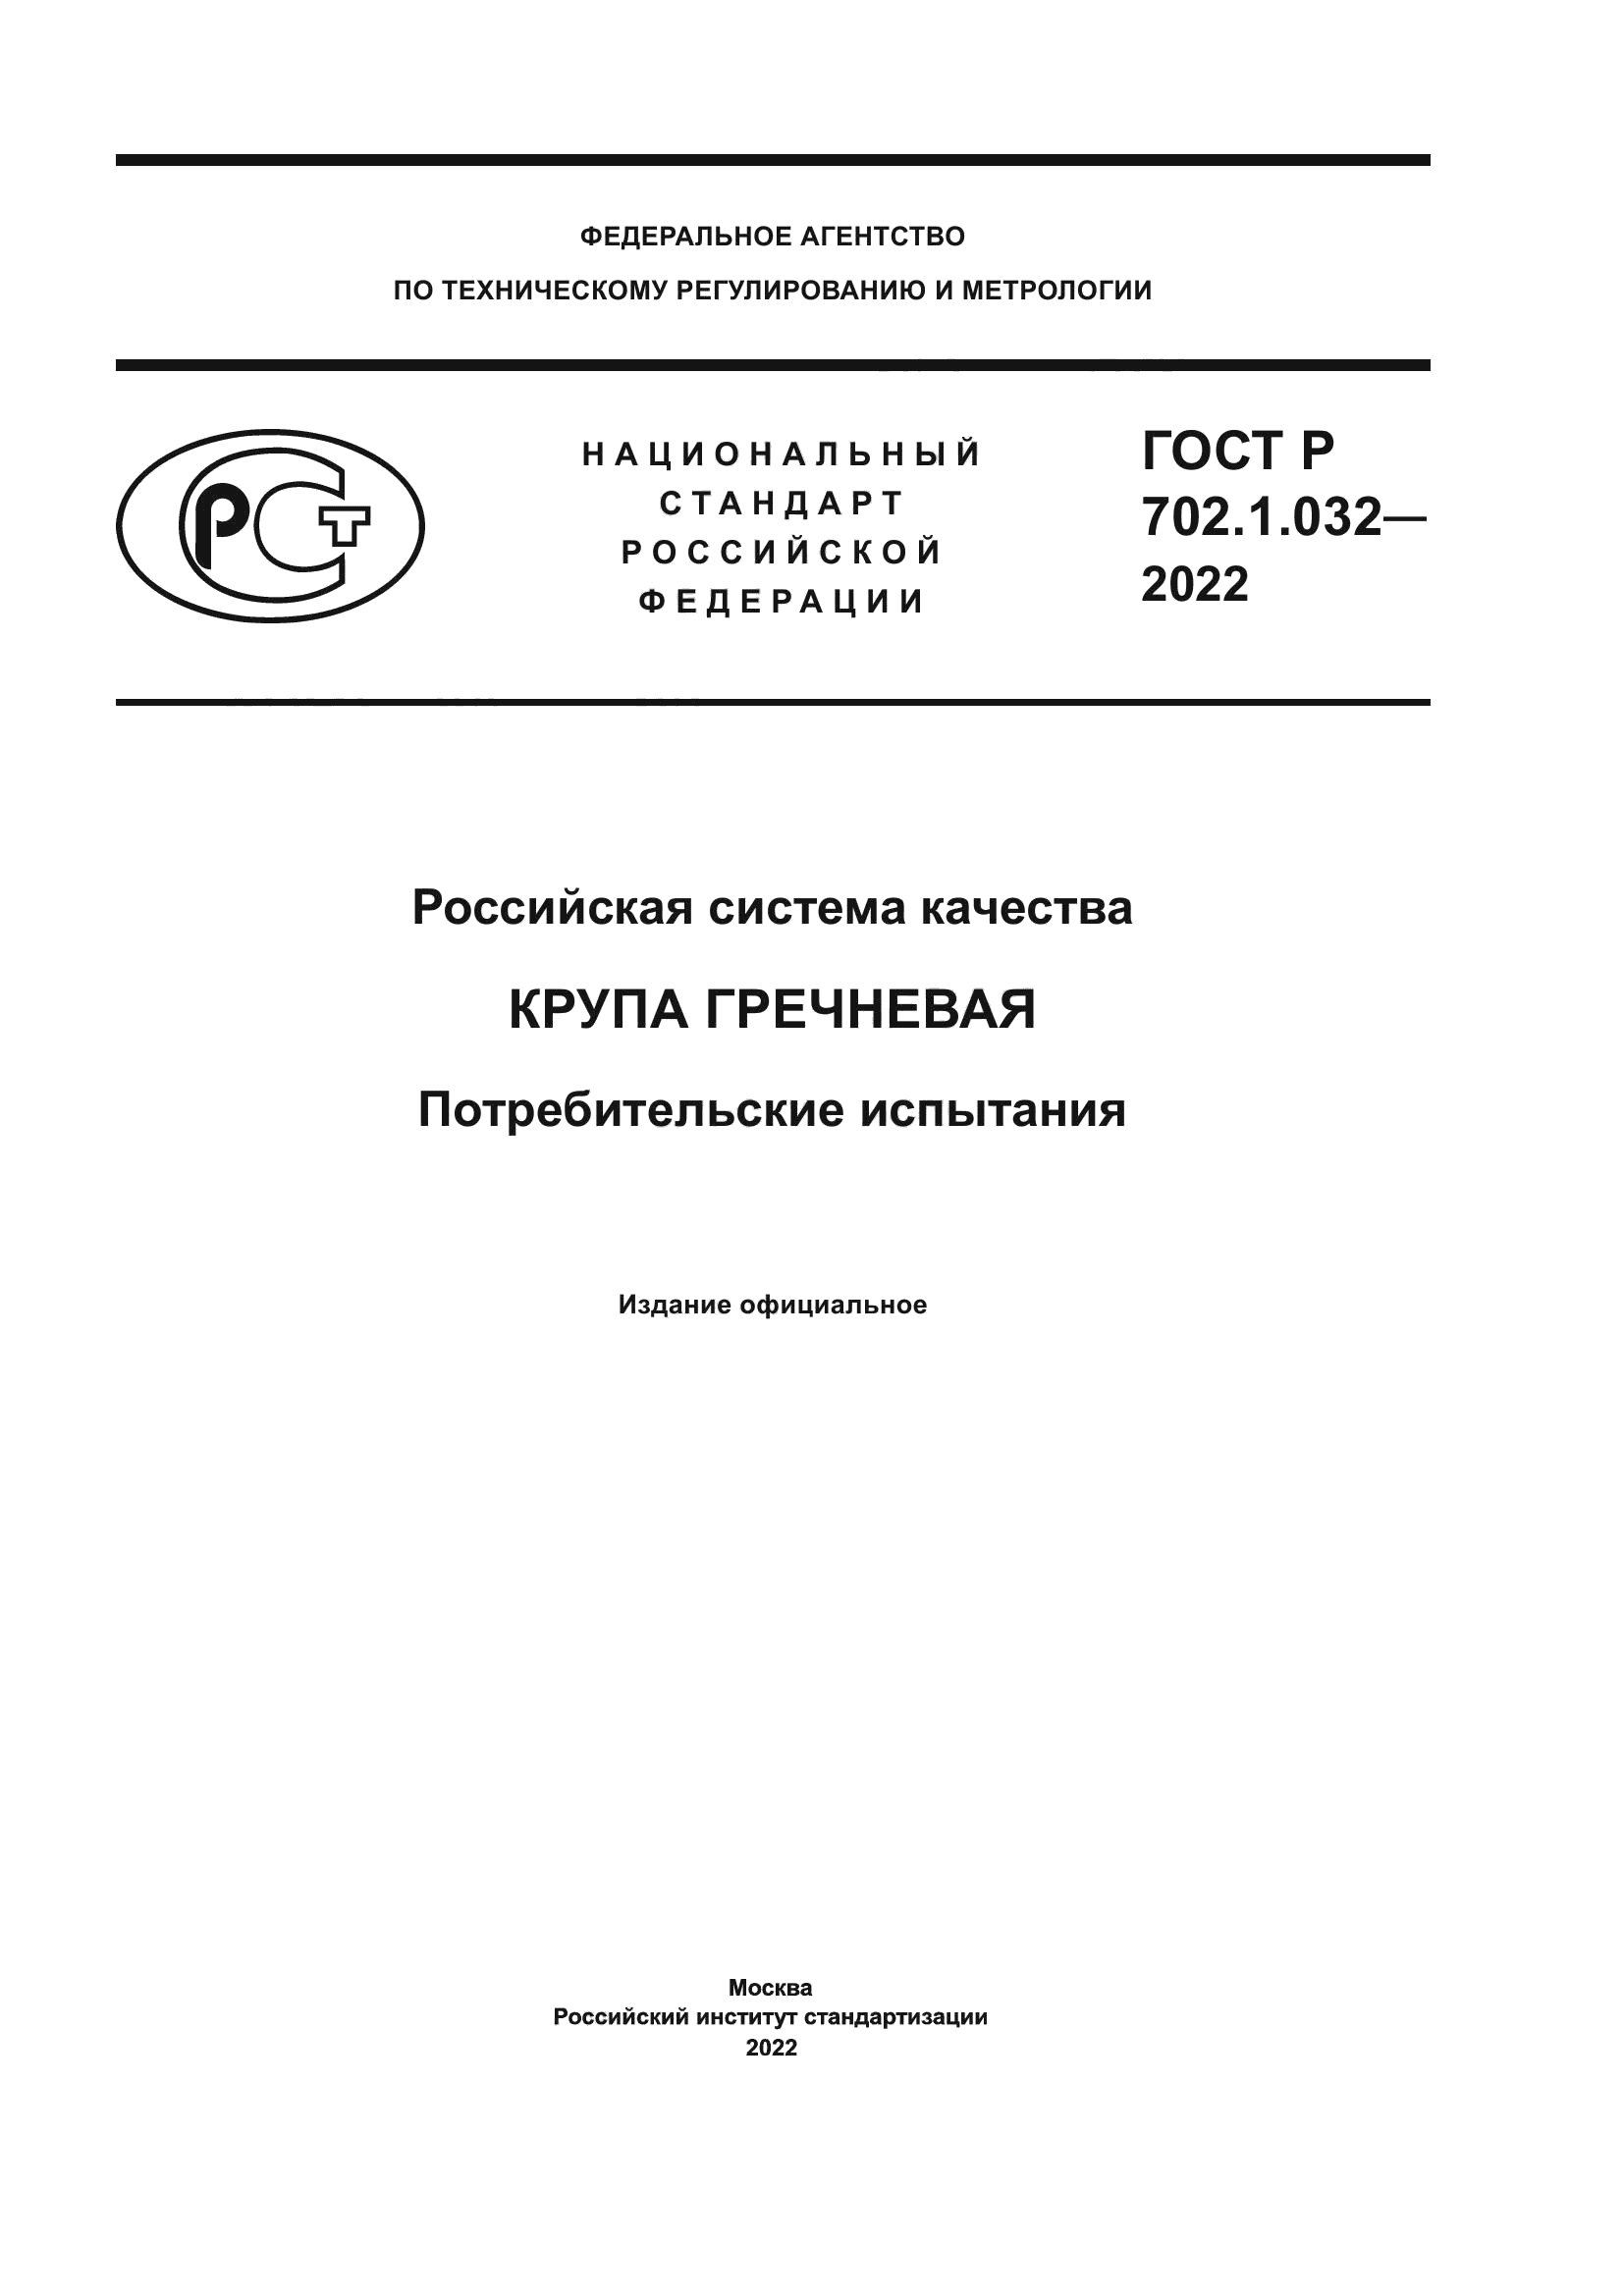 ГОСТ Р 702.1.032-2022